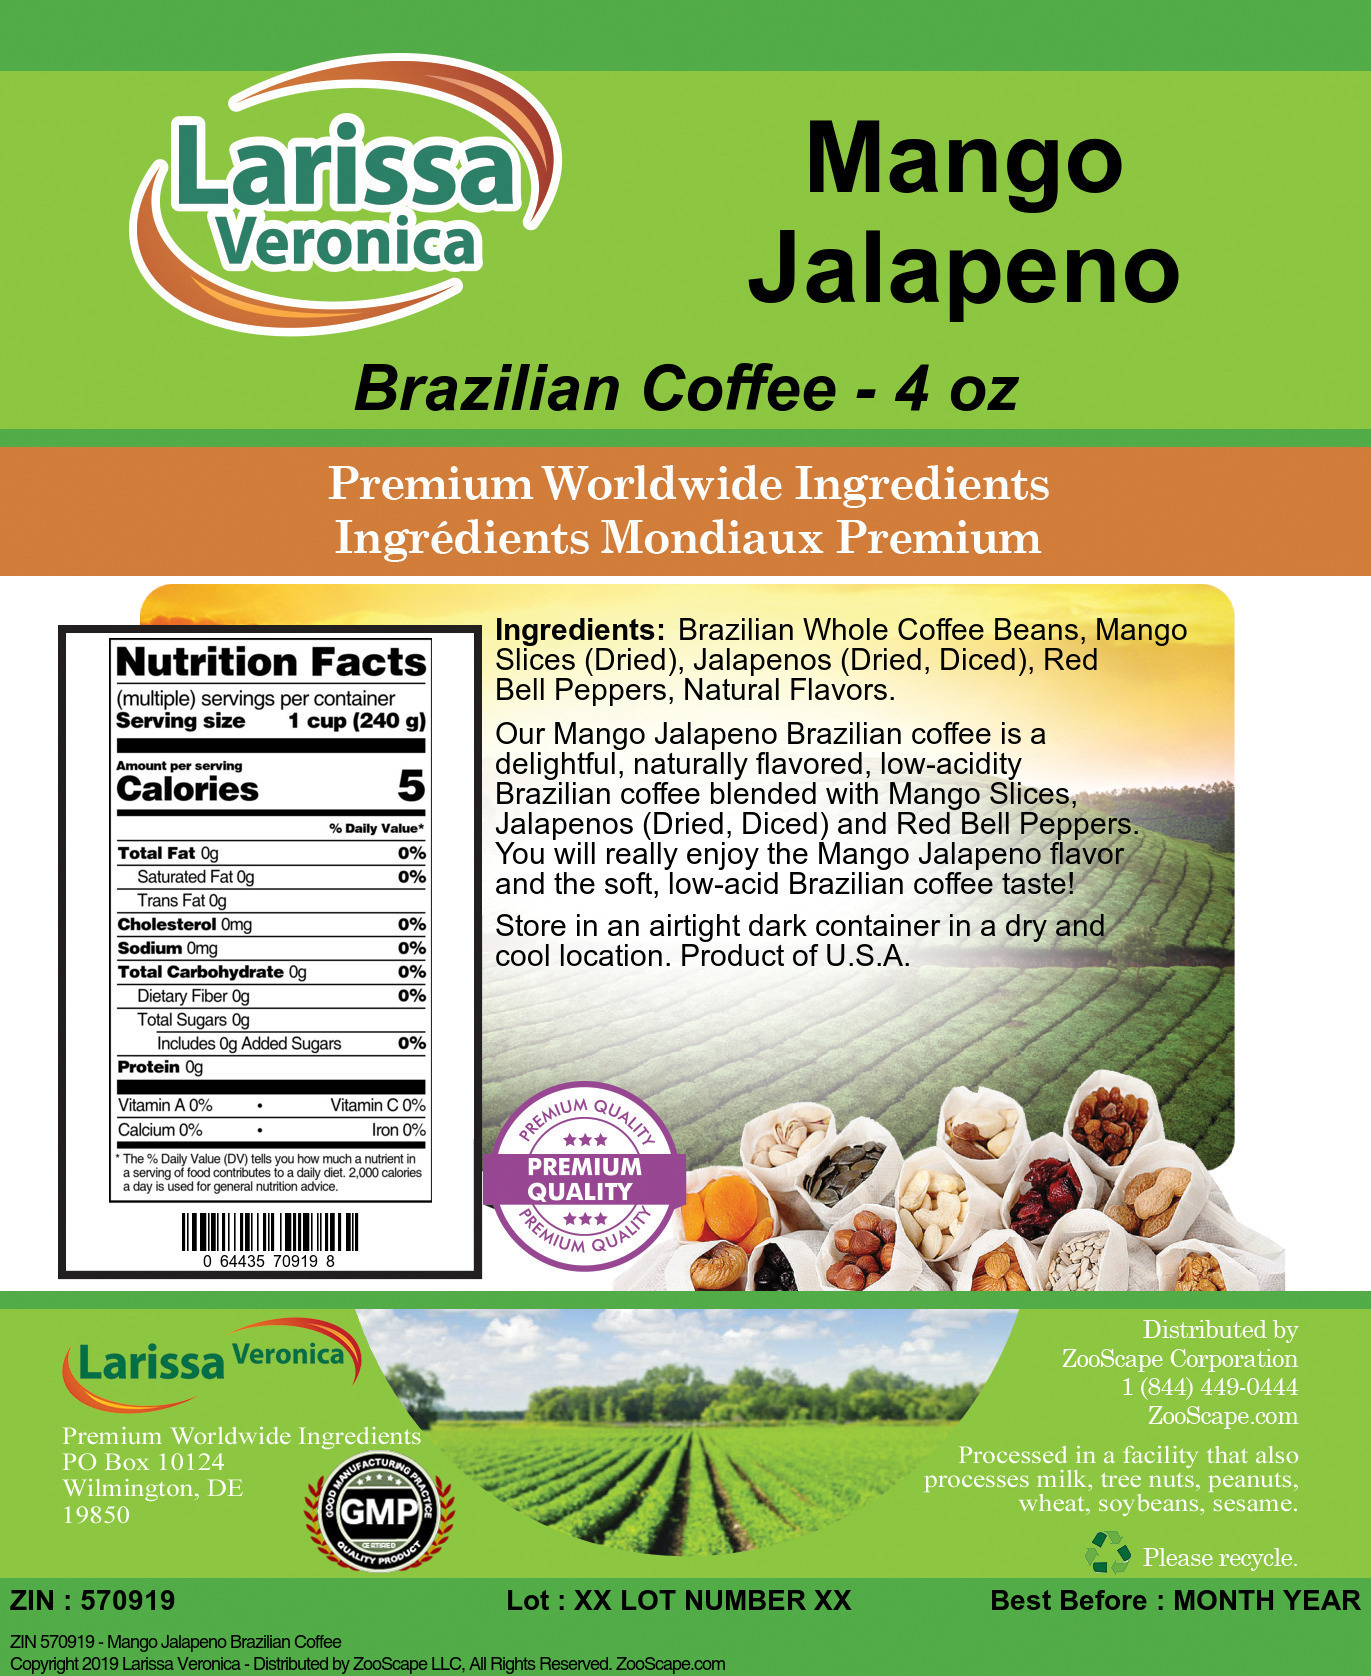 Mango Jalapeno Brazilian Coffee - Label